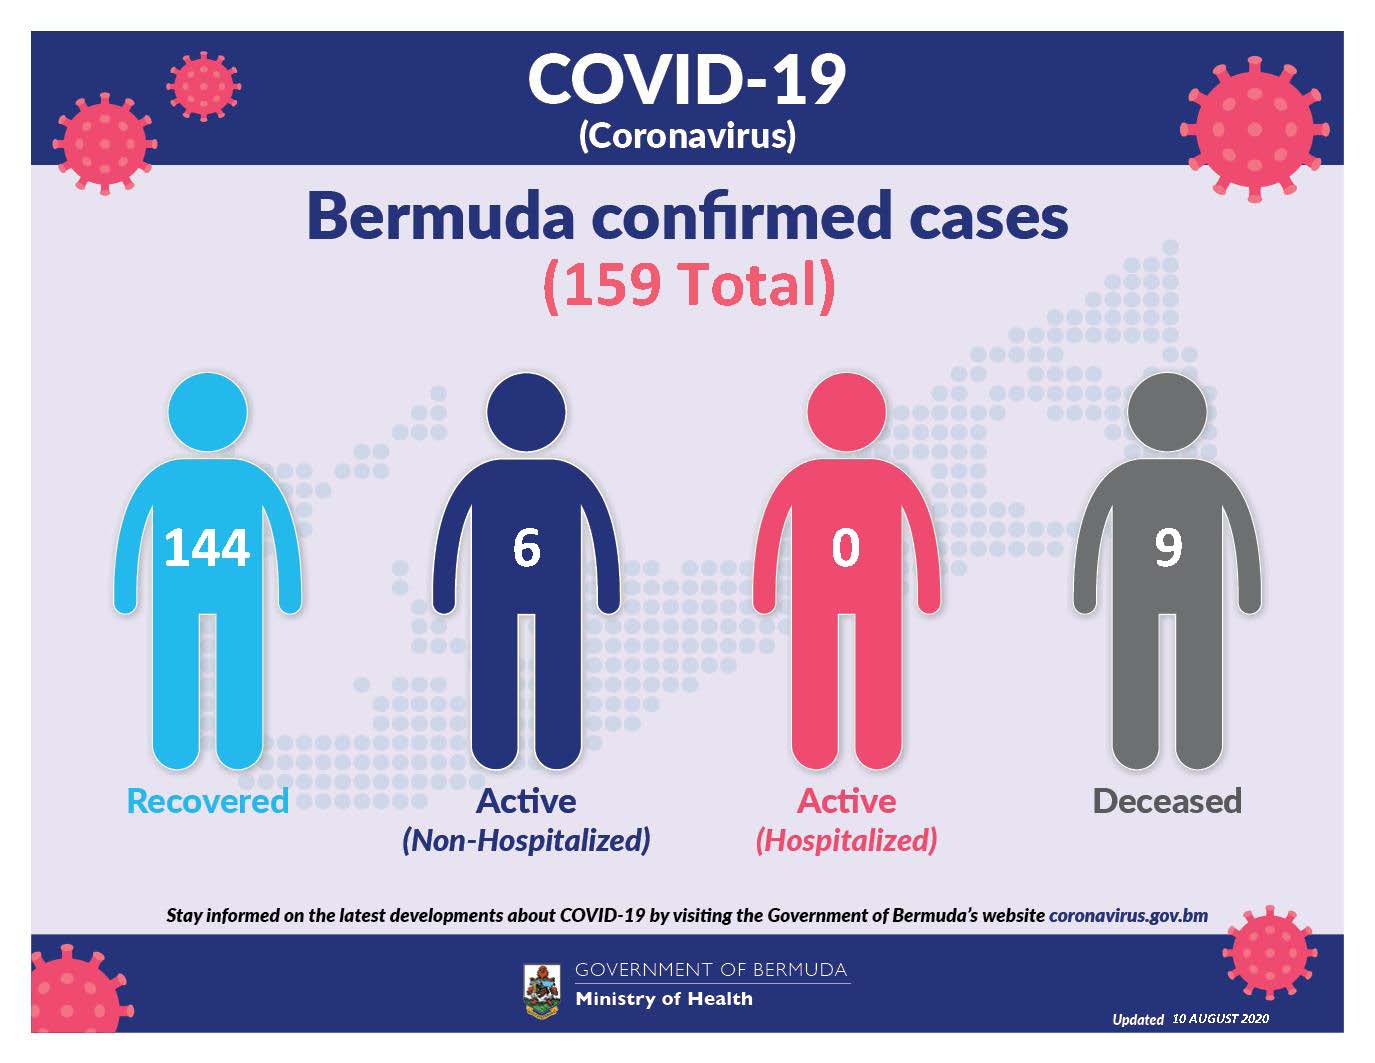 One new (imported) positive COVID-19 case found in Bermuda